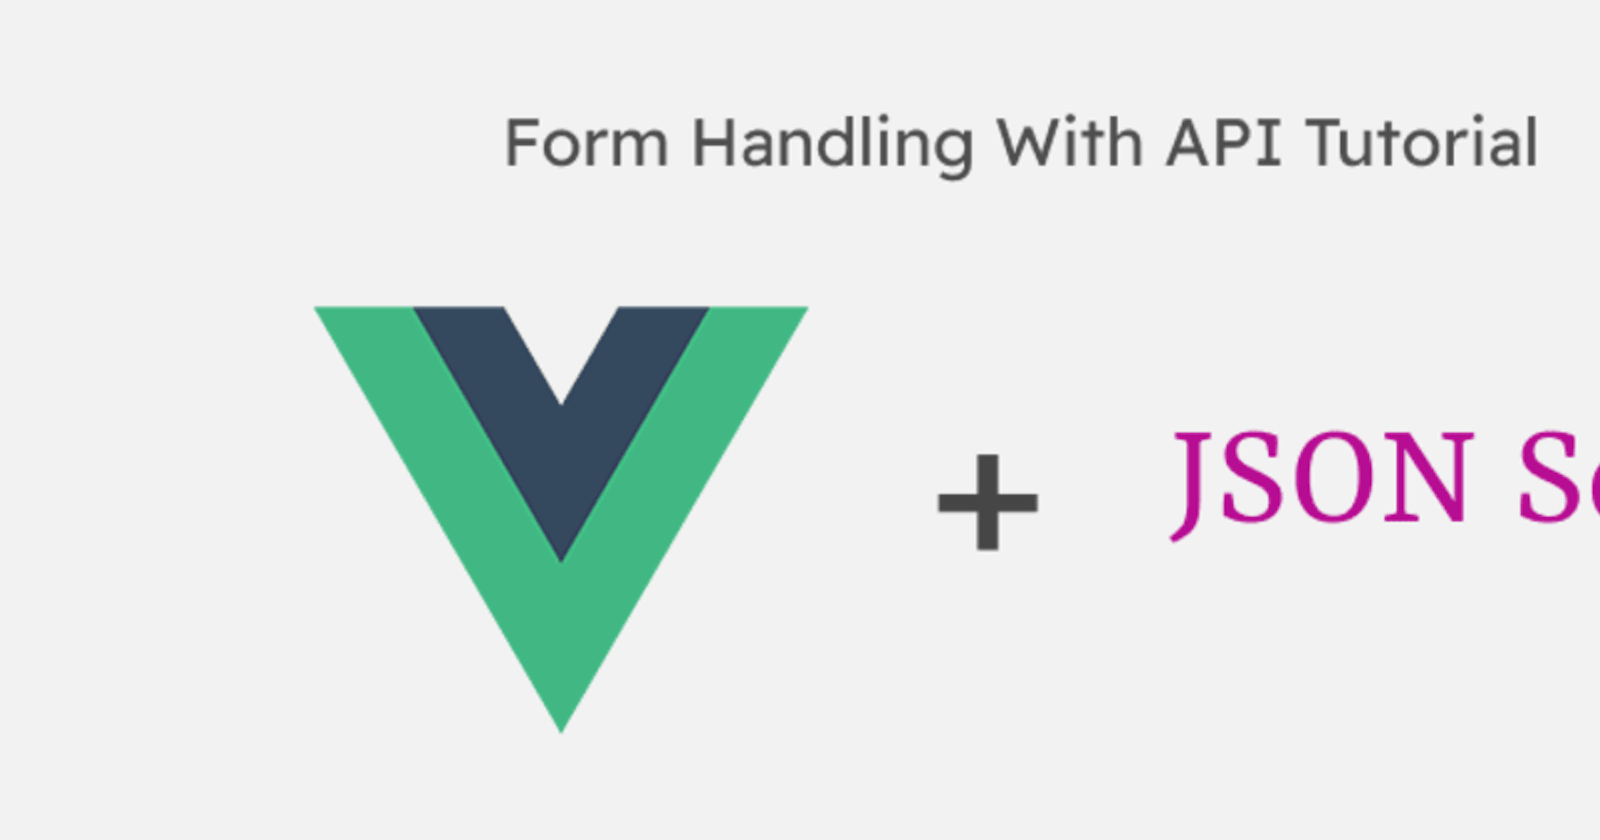 Form Handling With API Tutorial